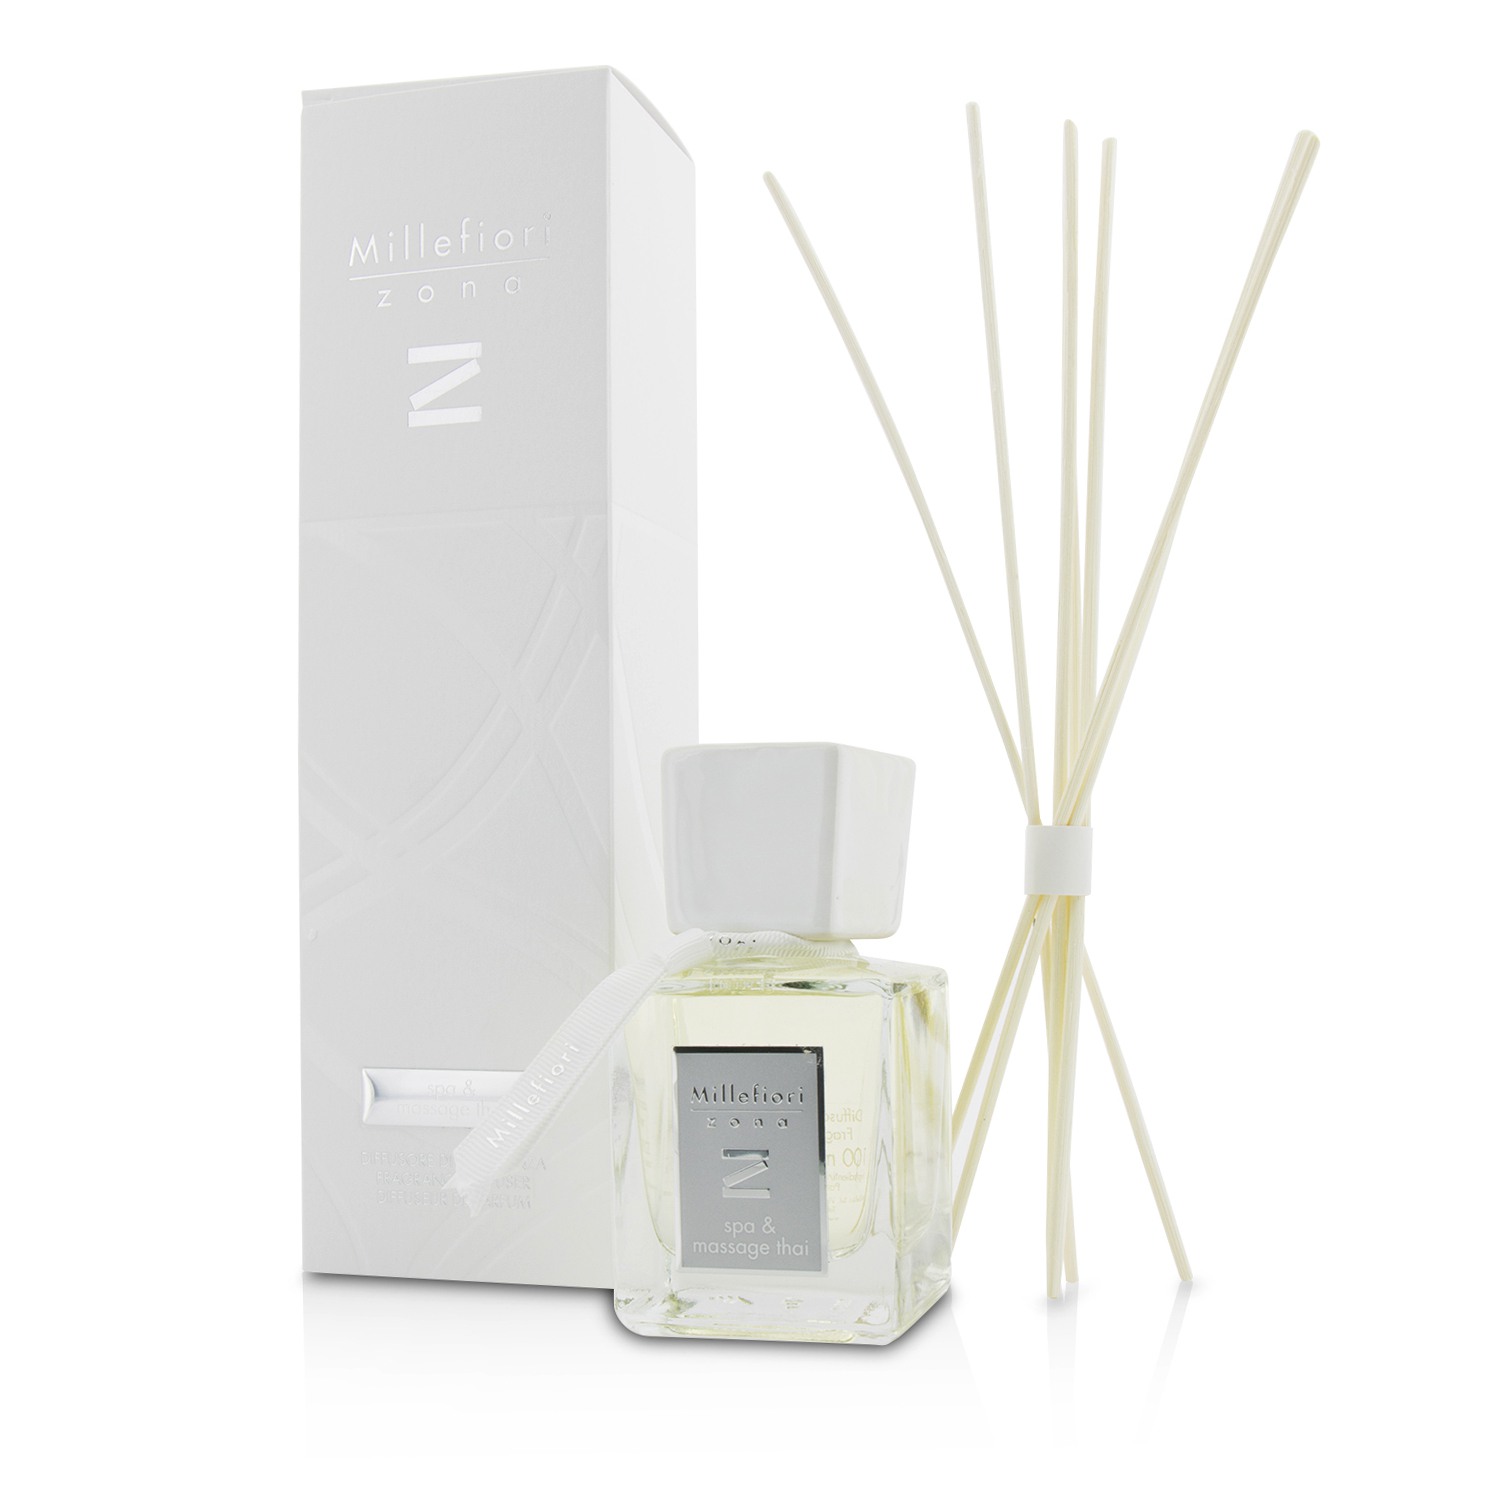 Zona Fragrance Diffuser - Spa  Massage Thai (New Packaging) Millefiori Image